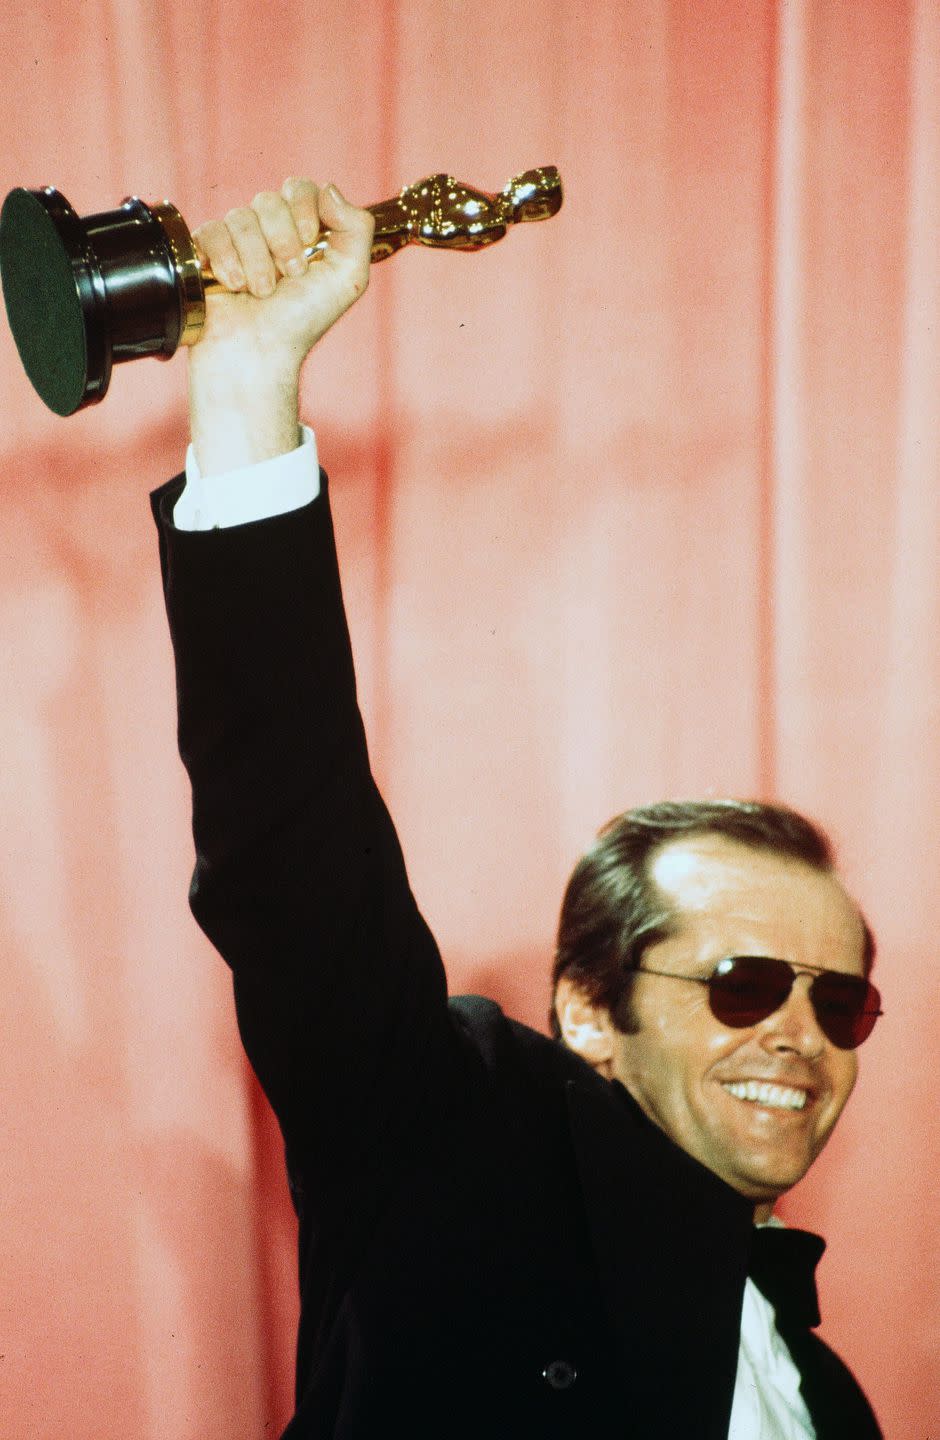 5) Jack Nicholson